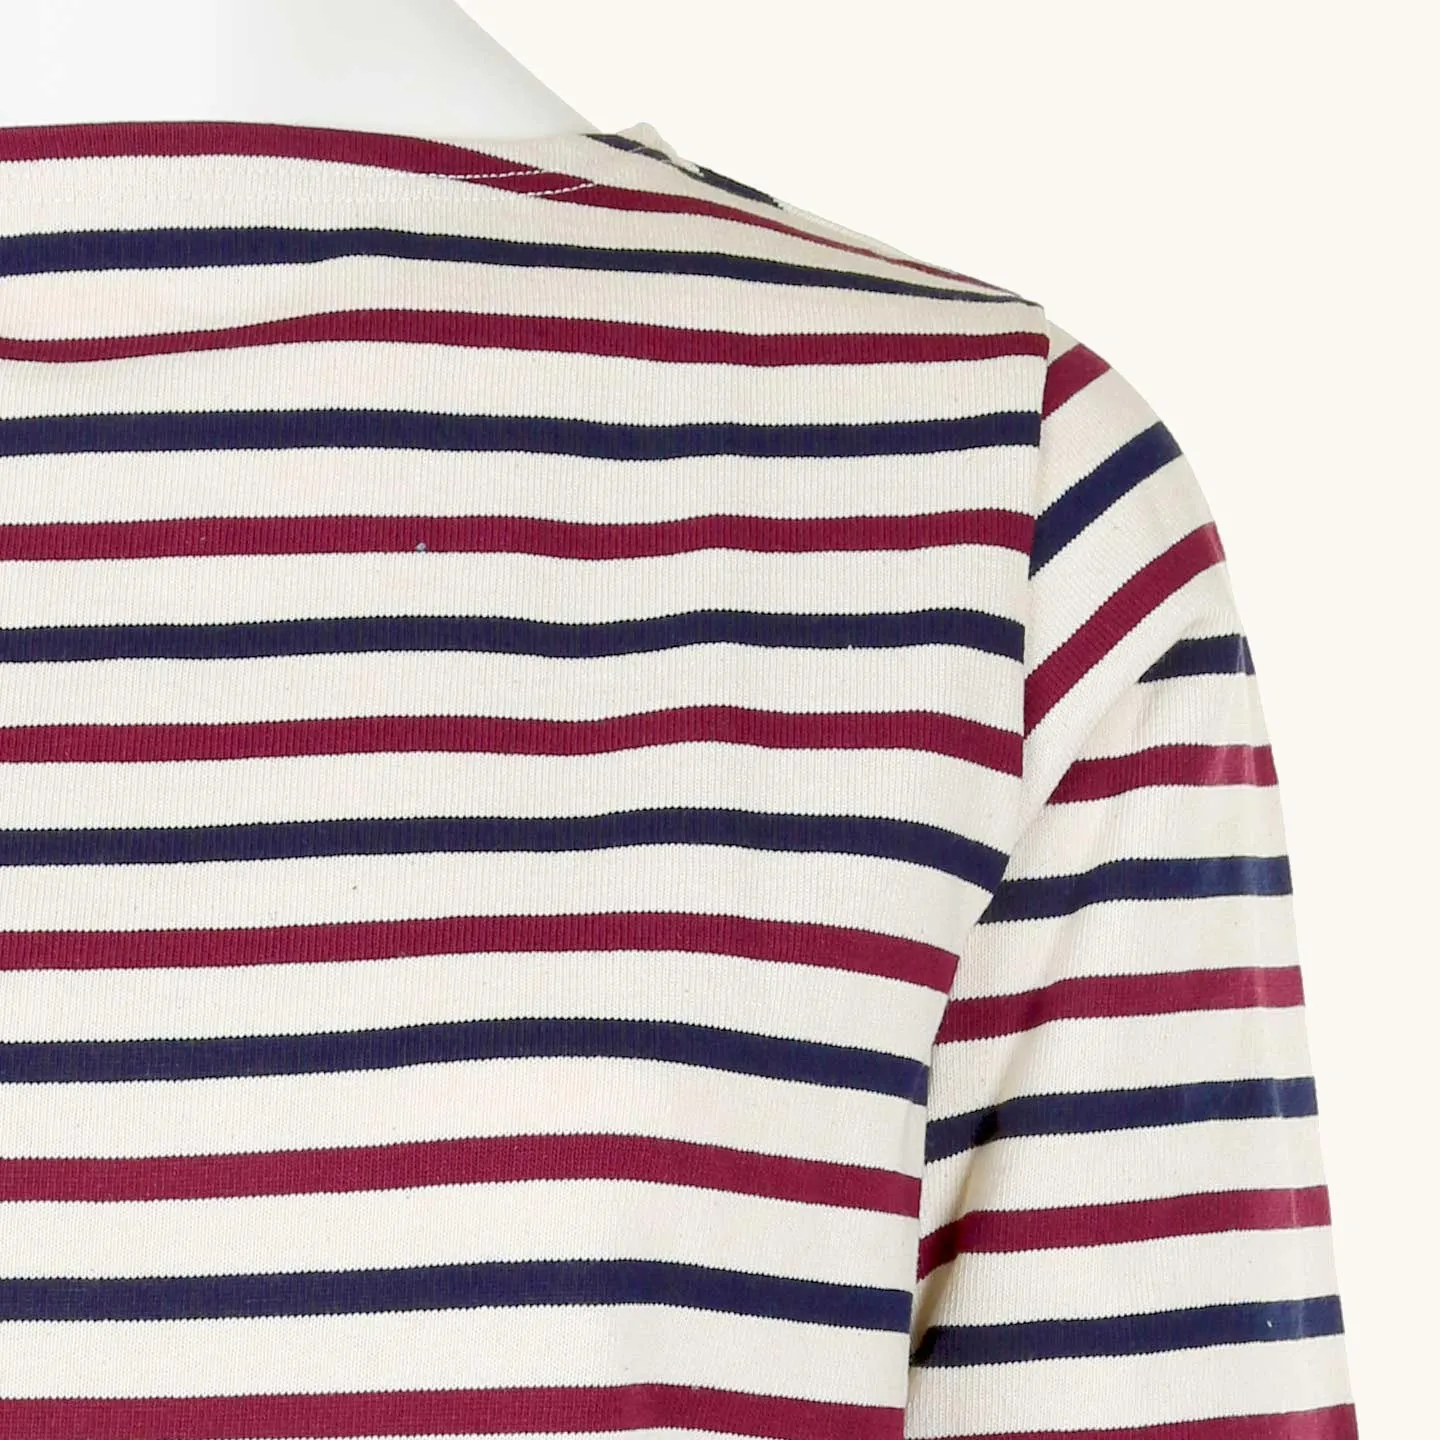 Striped shirt Ecru / Marine / Hermes, unisex